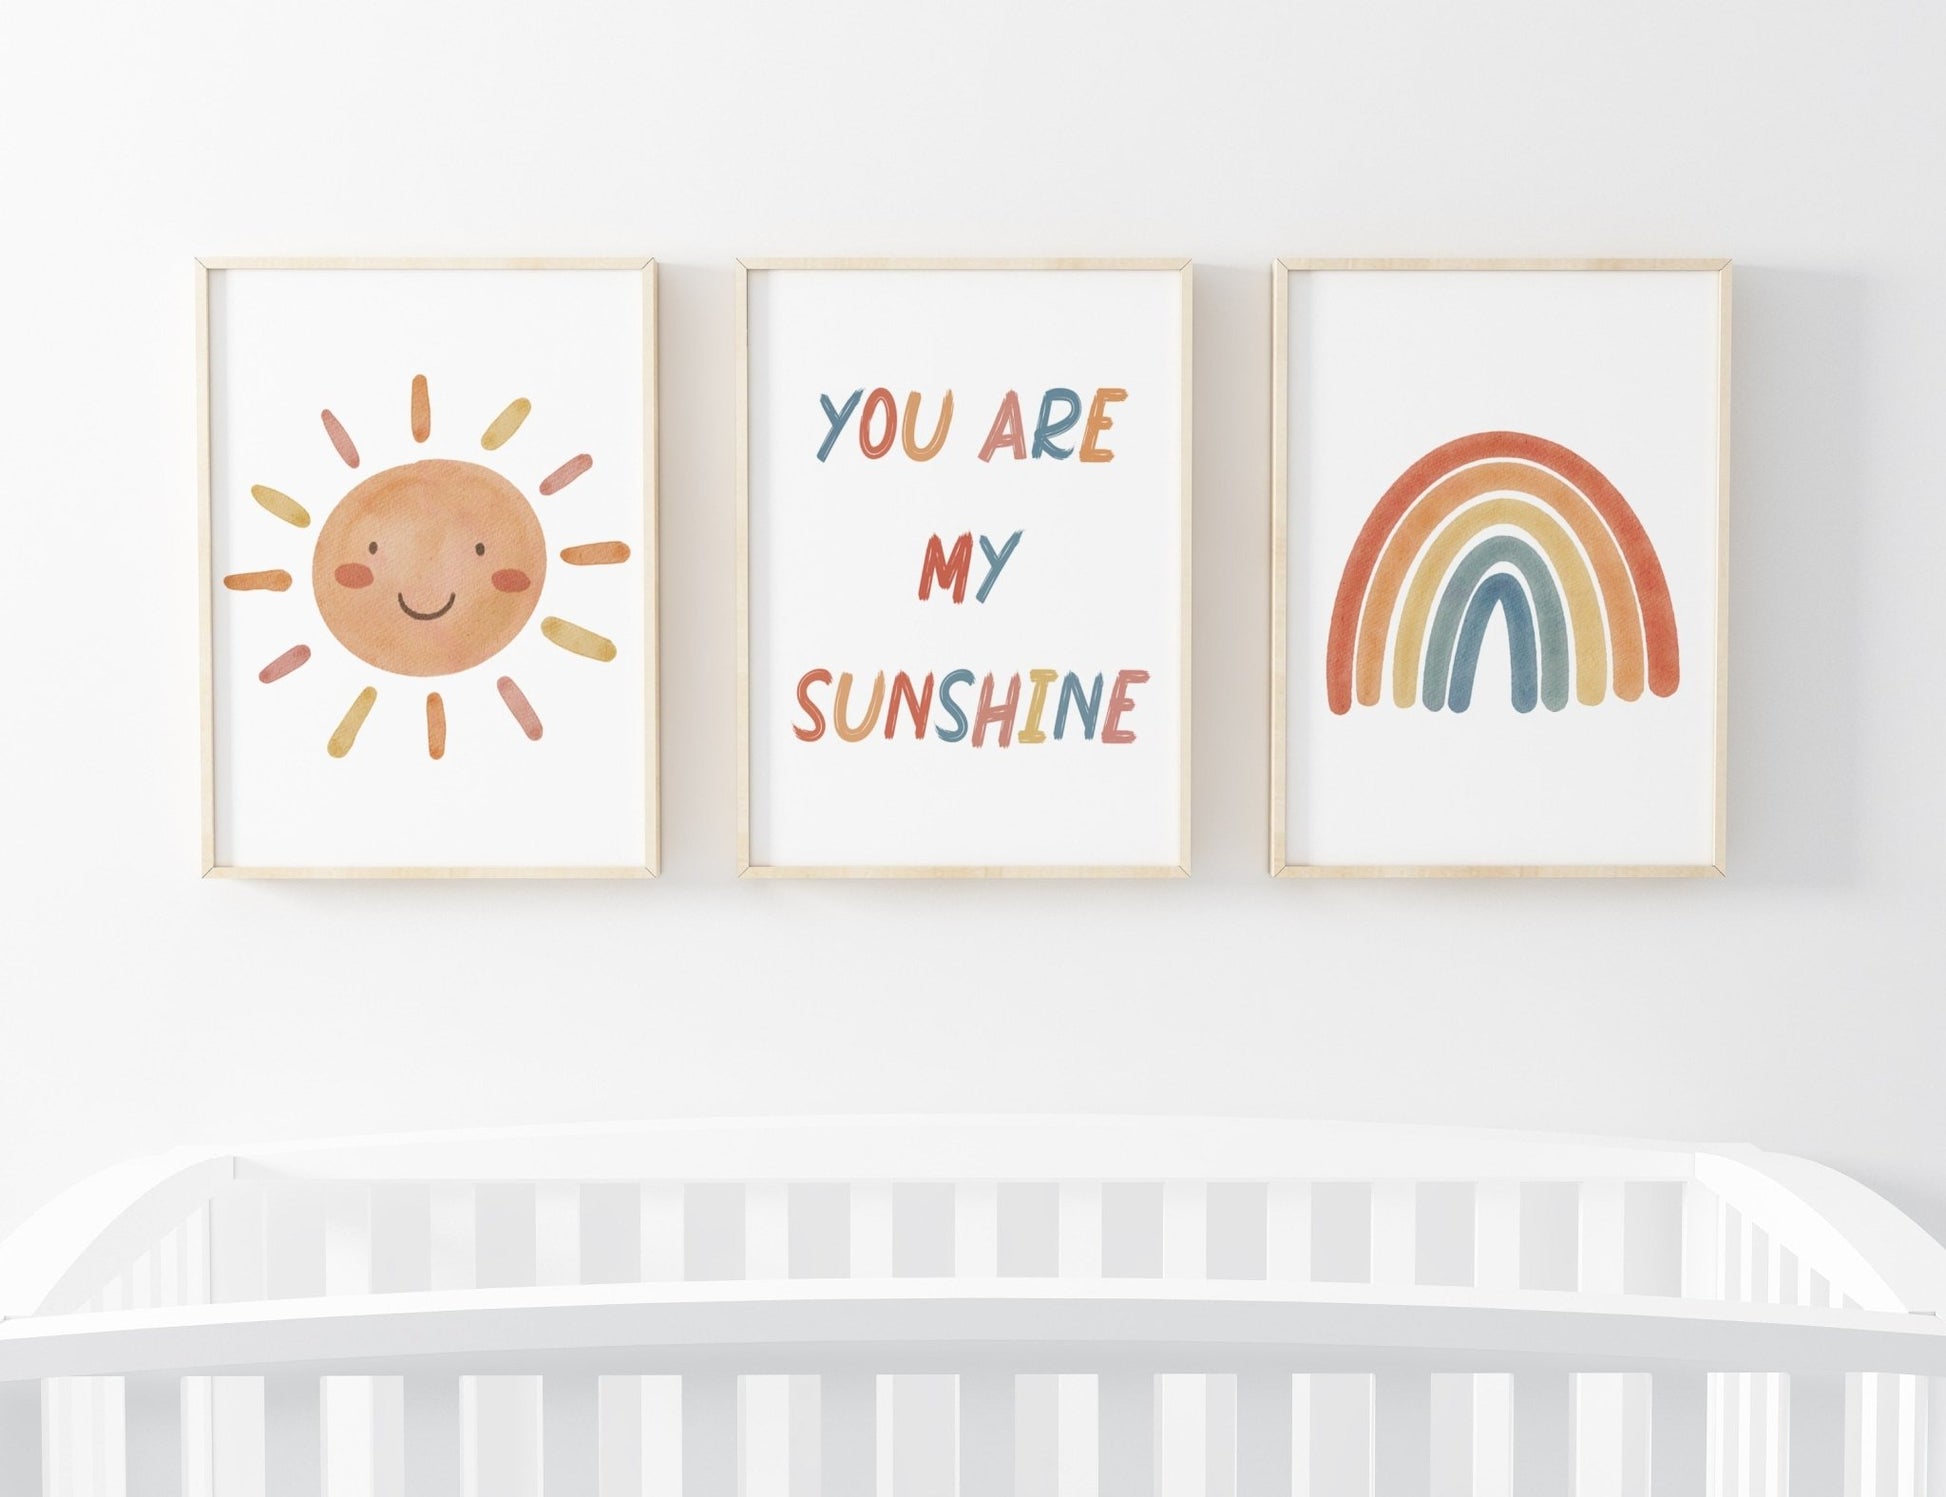 You are my sunshine - 3 set - Pompom Prints